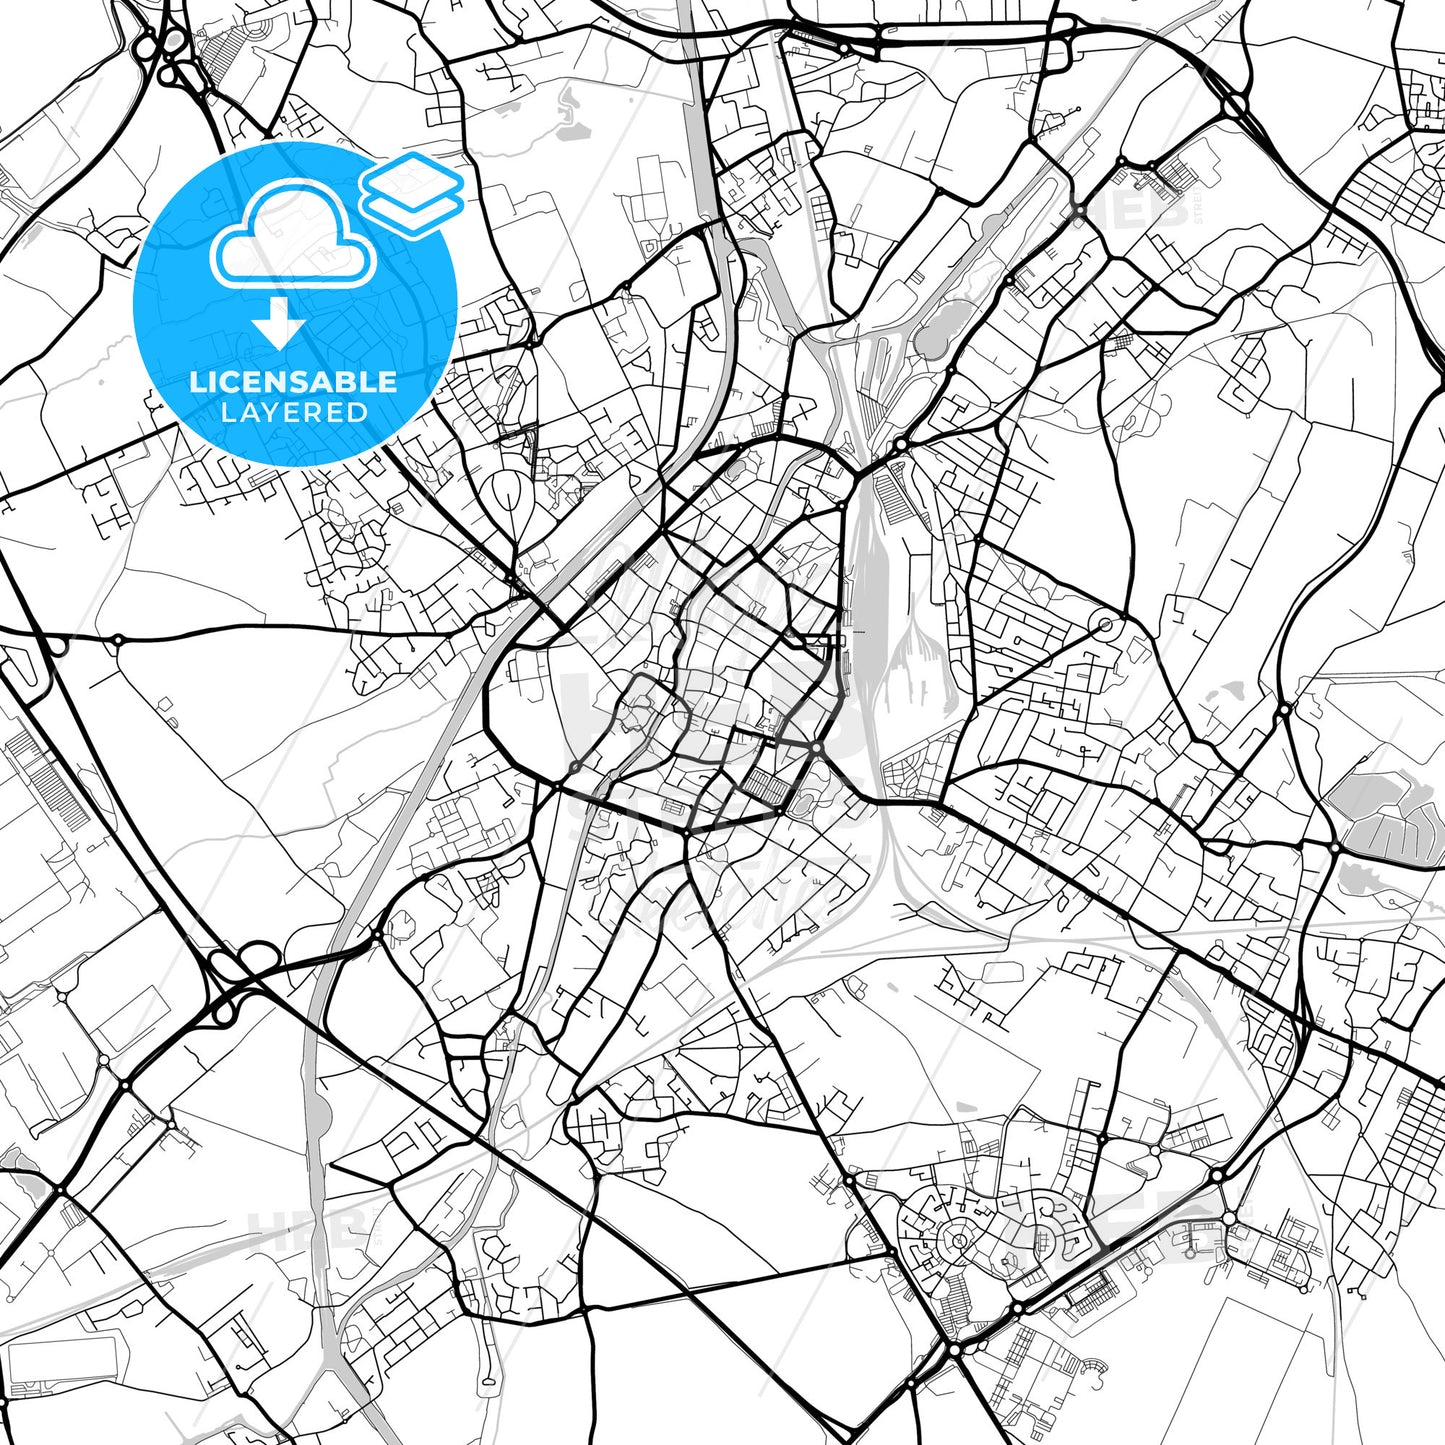 Layered PDF map of Douai, Nord, France